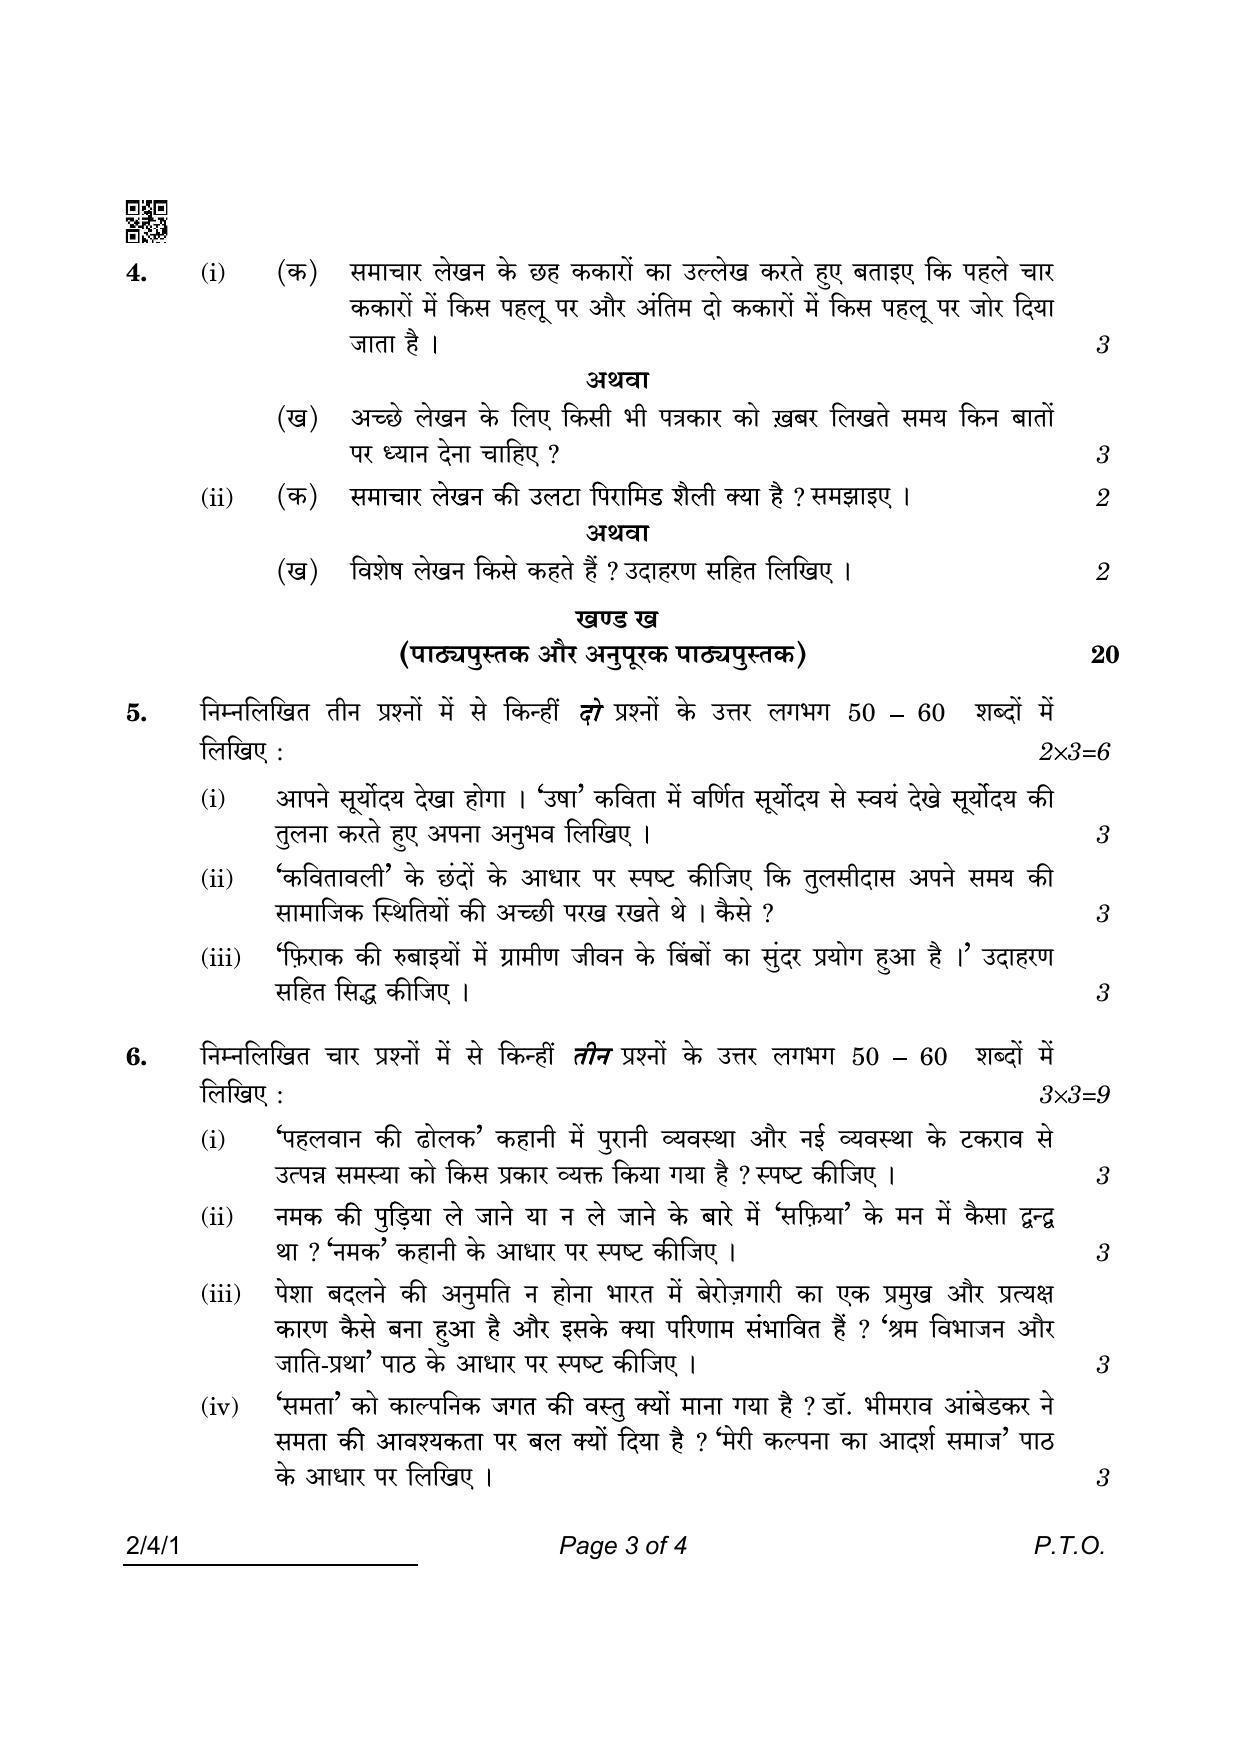 CBSE Class 12 2-4-1 Hindi Core 2022 Question Paper - Page 3